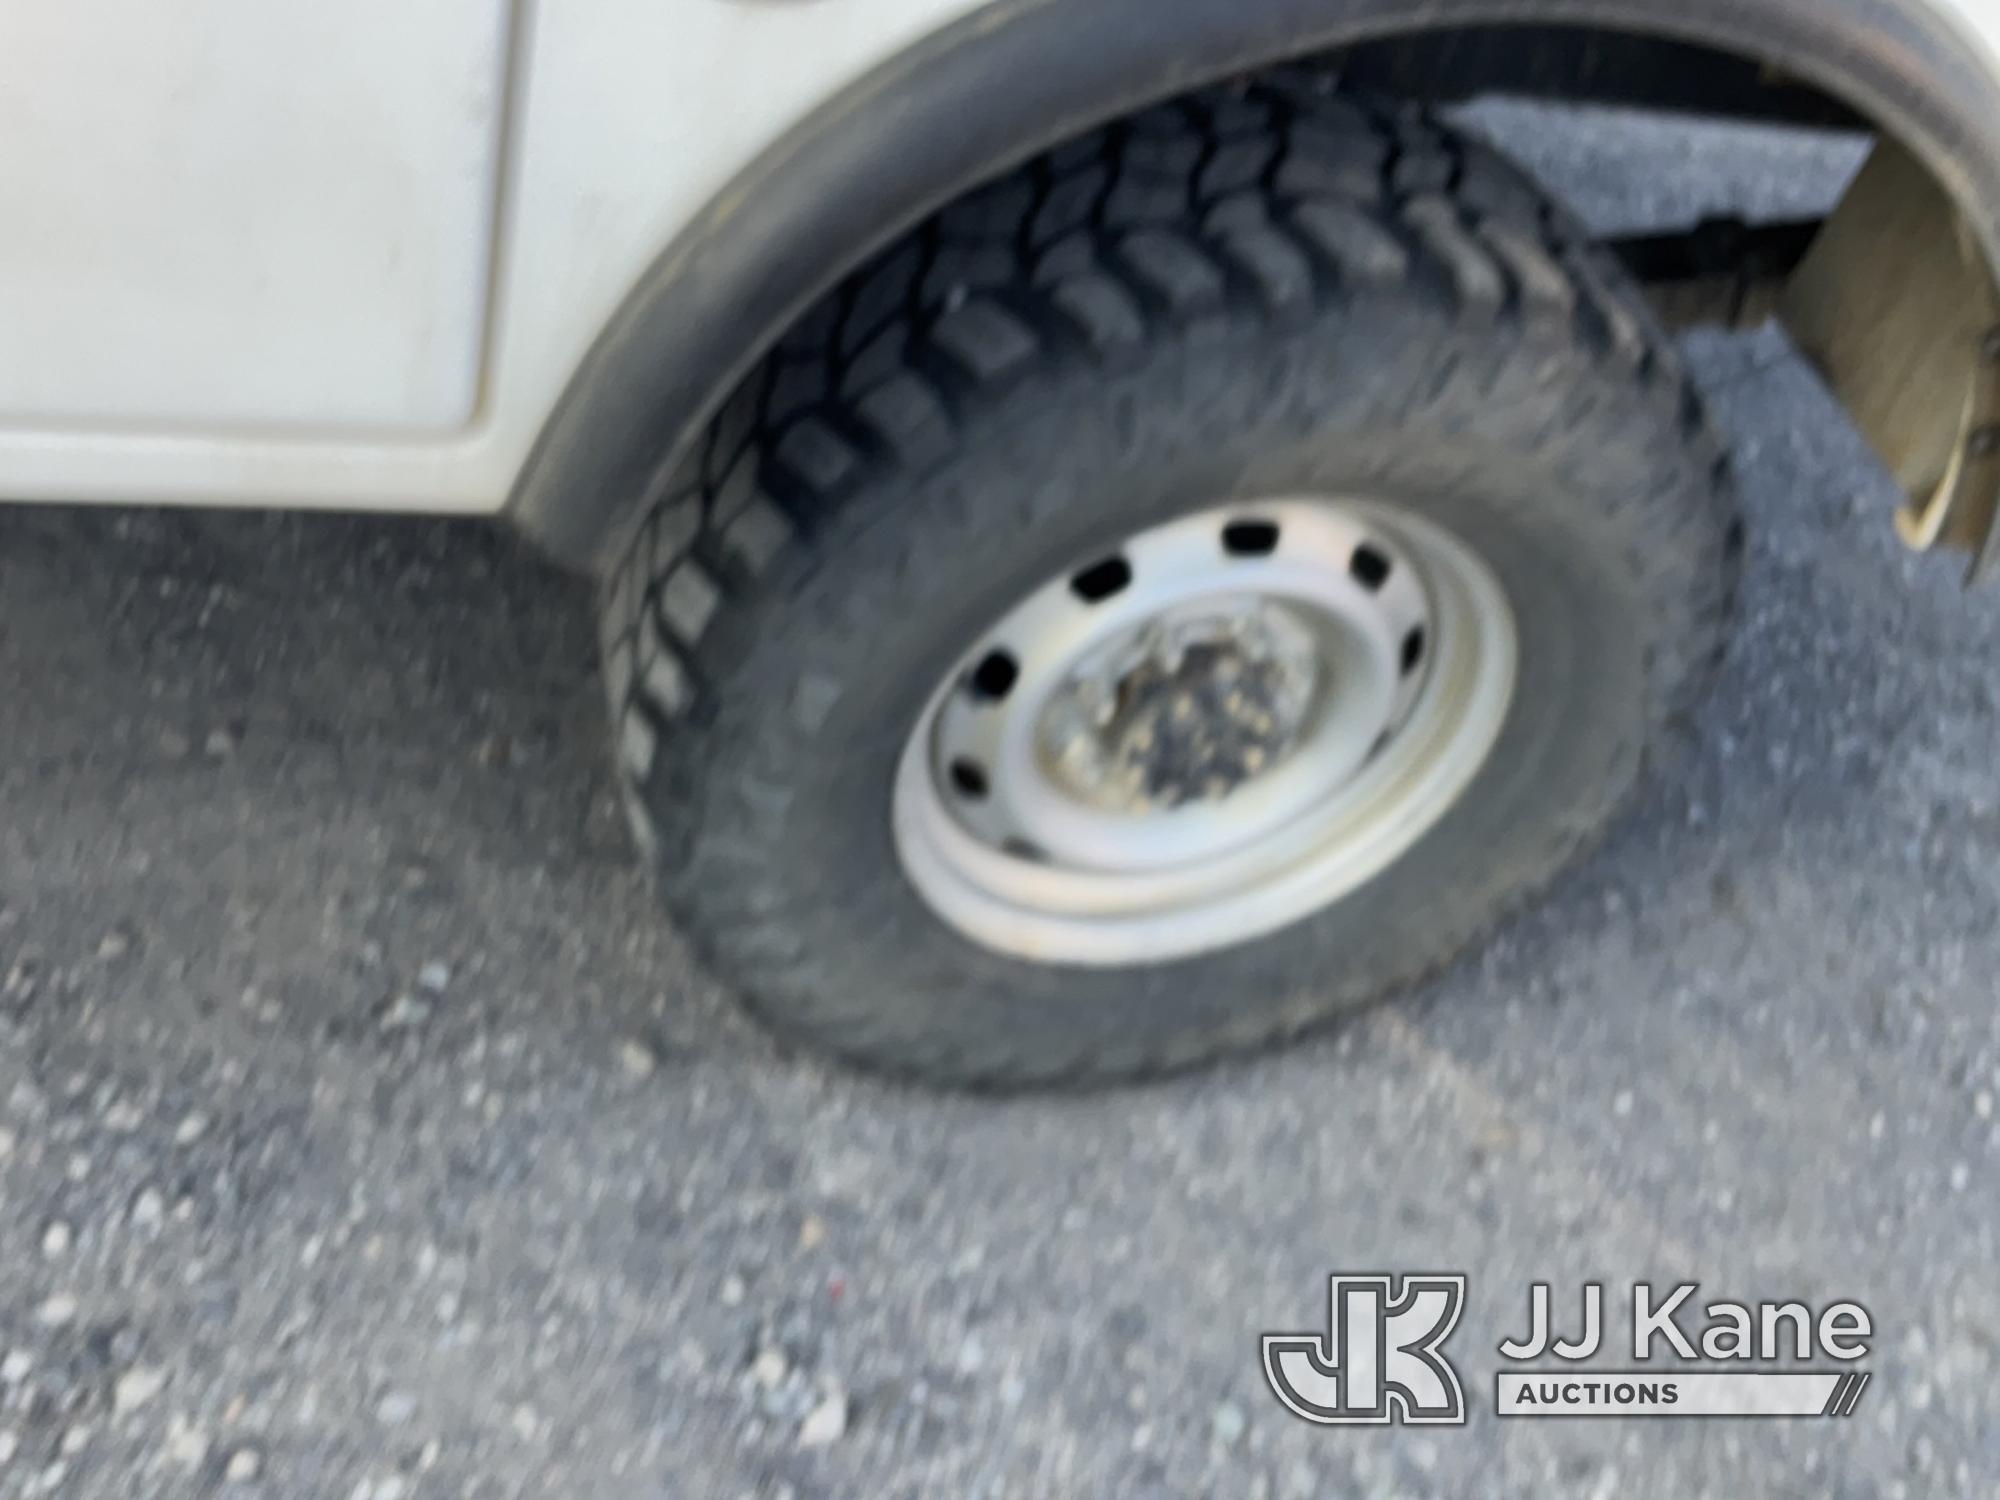 (Jurupa Valley, CA) 2012 RAM 2500 4x4 Crew-Cab Pickup Truck Runs & Moves,Rear Bumper Body Damage